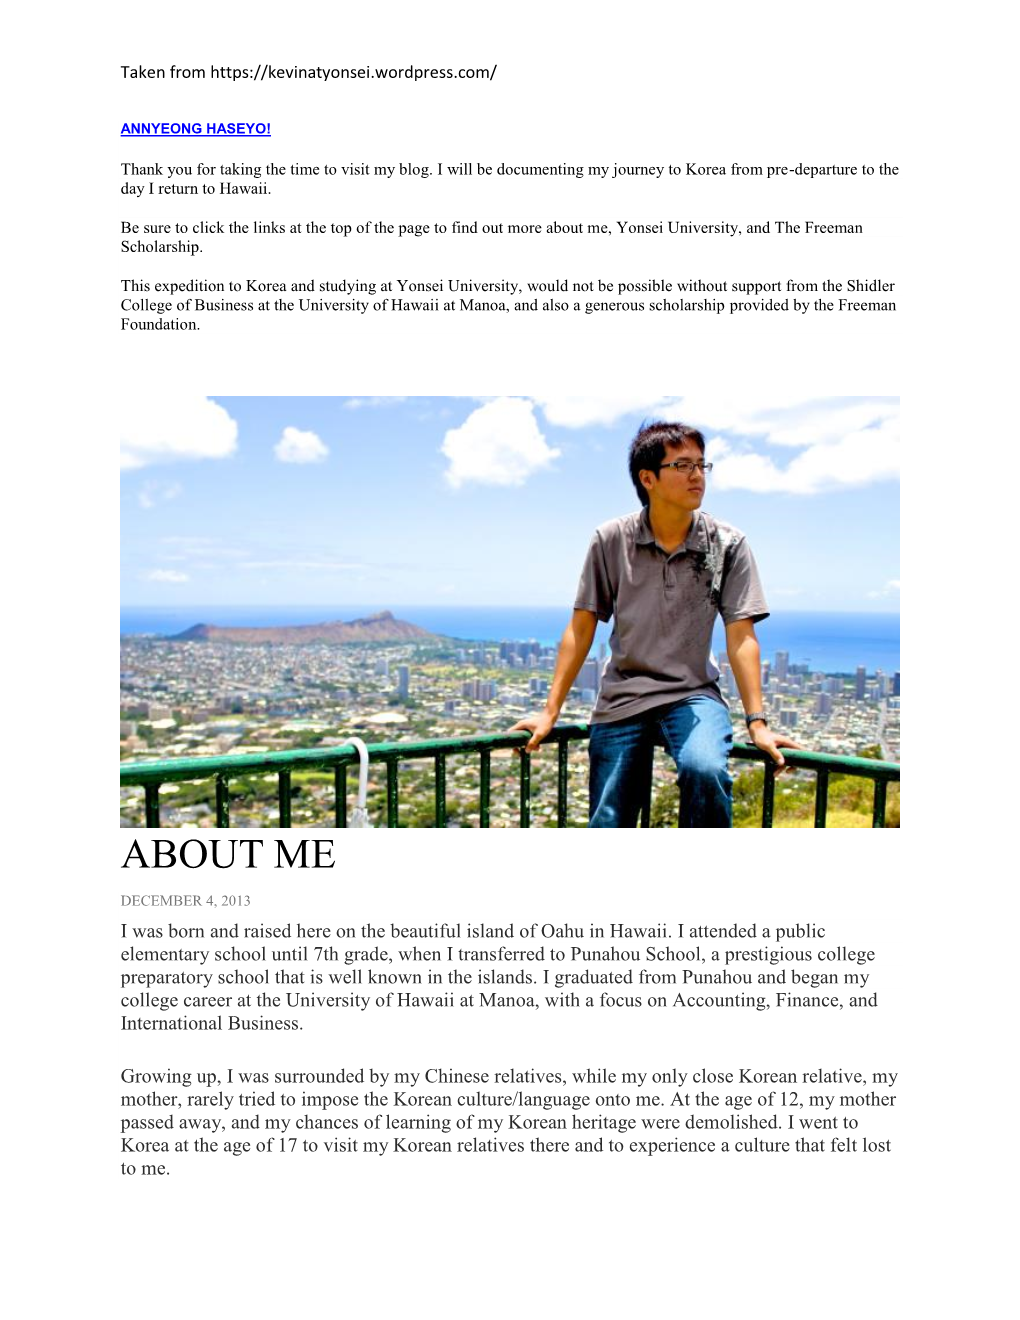 About Me, Yonsei University, and the Freeman Scholarship